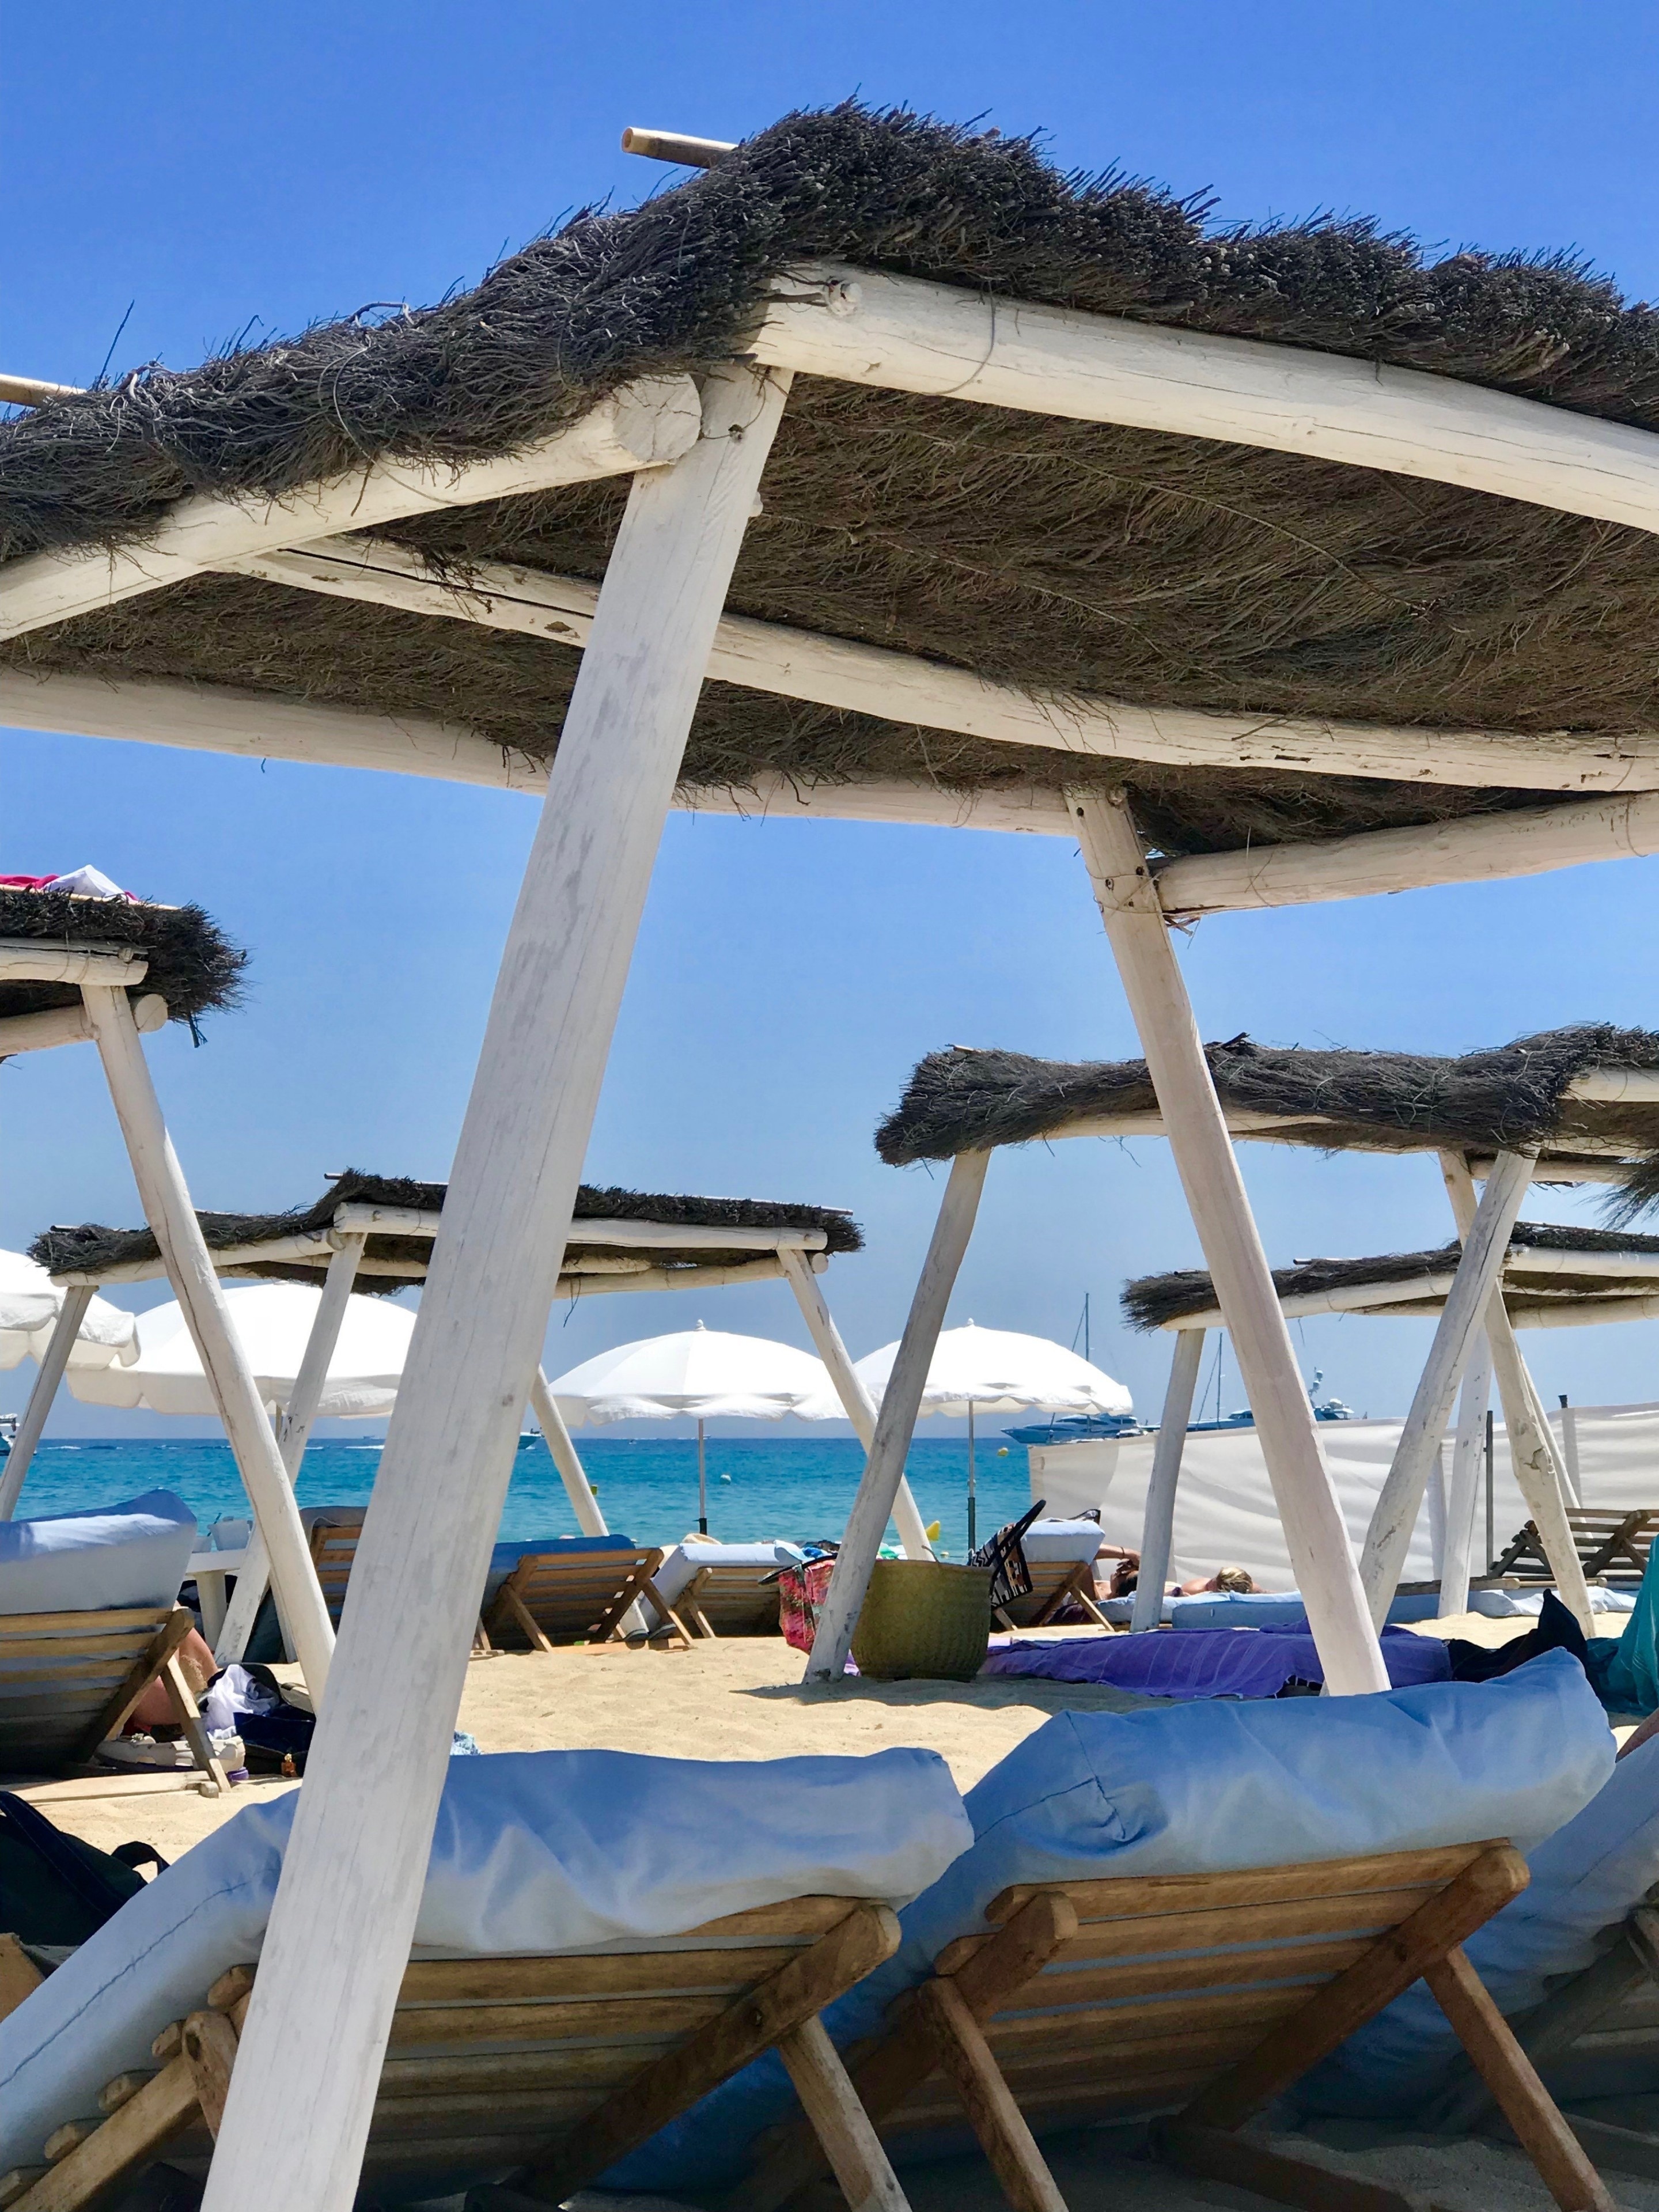 Our exclusive selection of Saint Tropez's best beaches